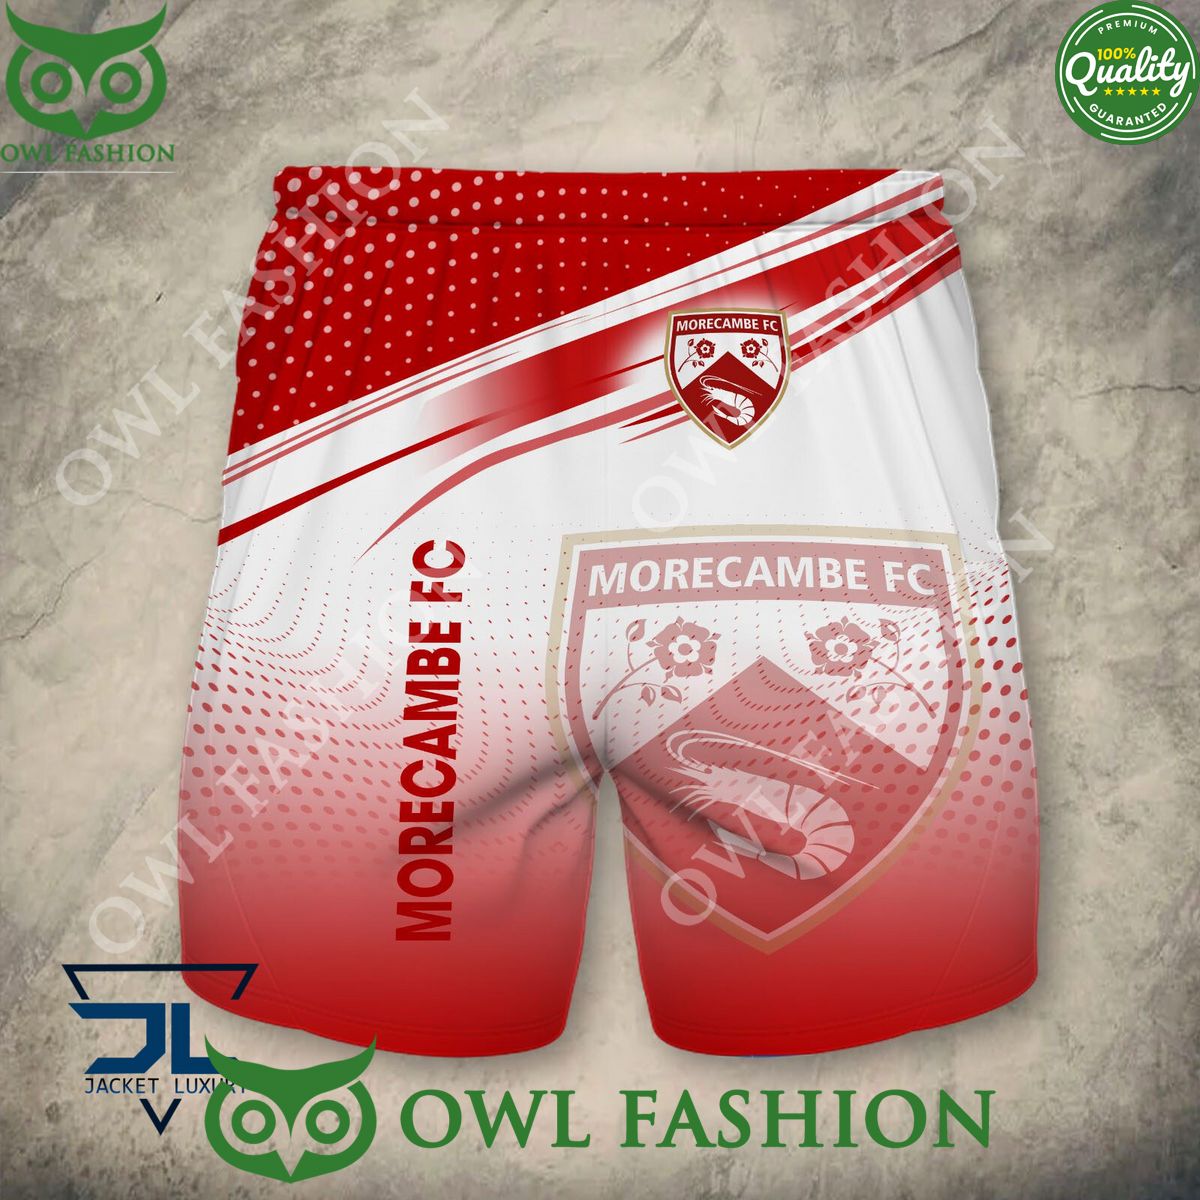 morecambe f c trending design league two hoodie shirt 13 92CQ6.jpg